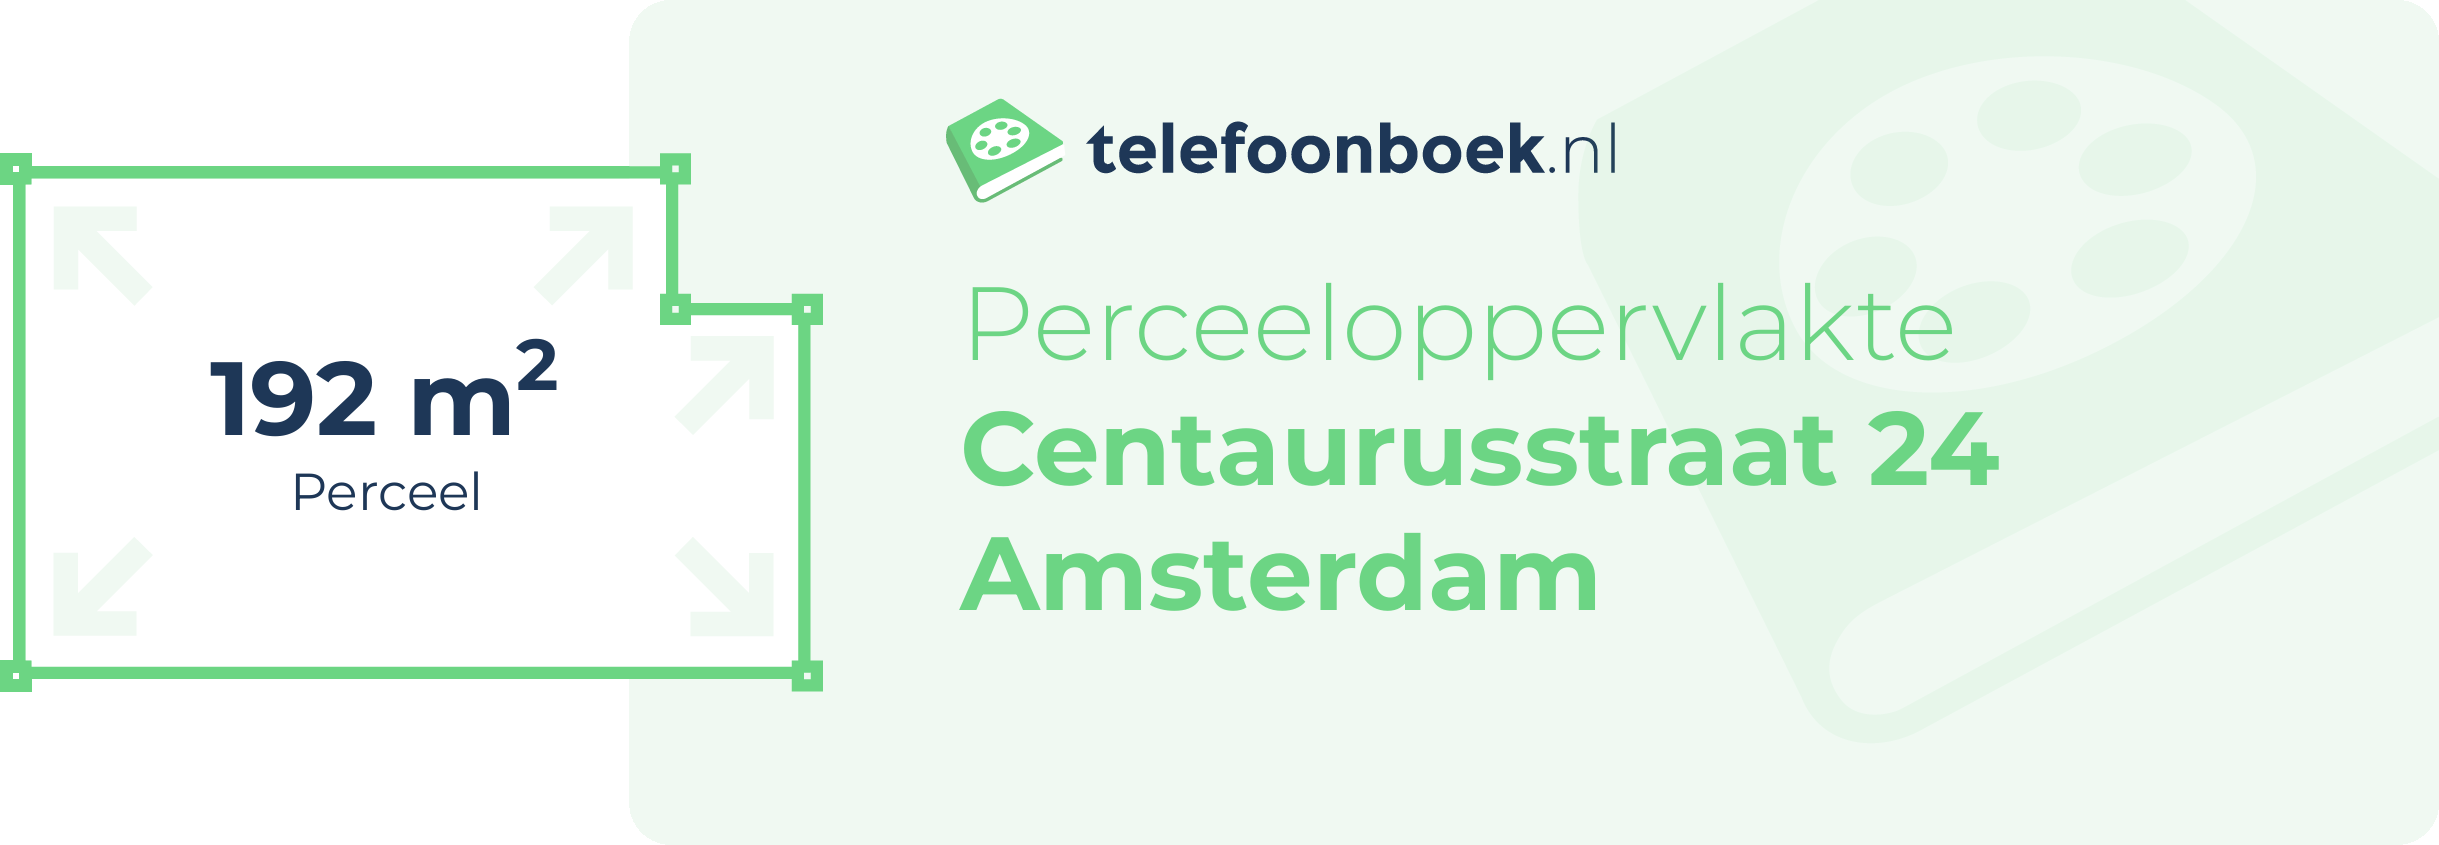 Perceeloppervlakte Centaurusstraat 24 Amsterdam